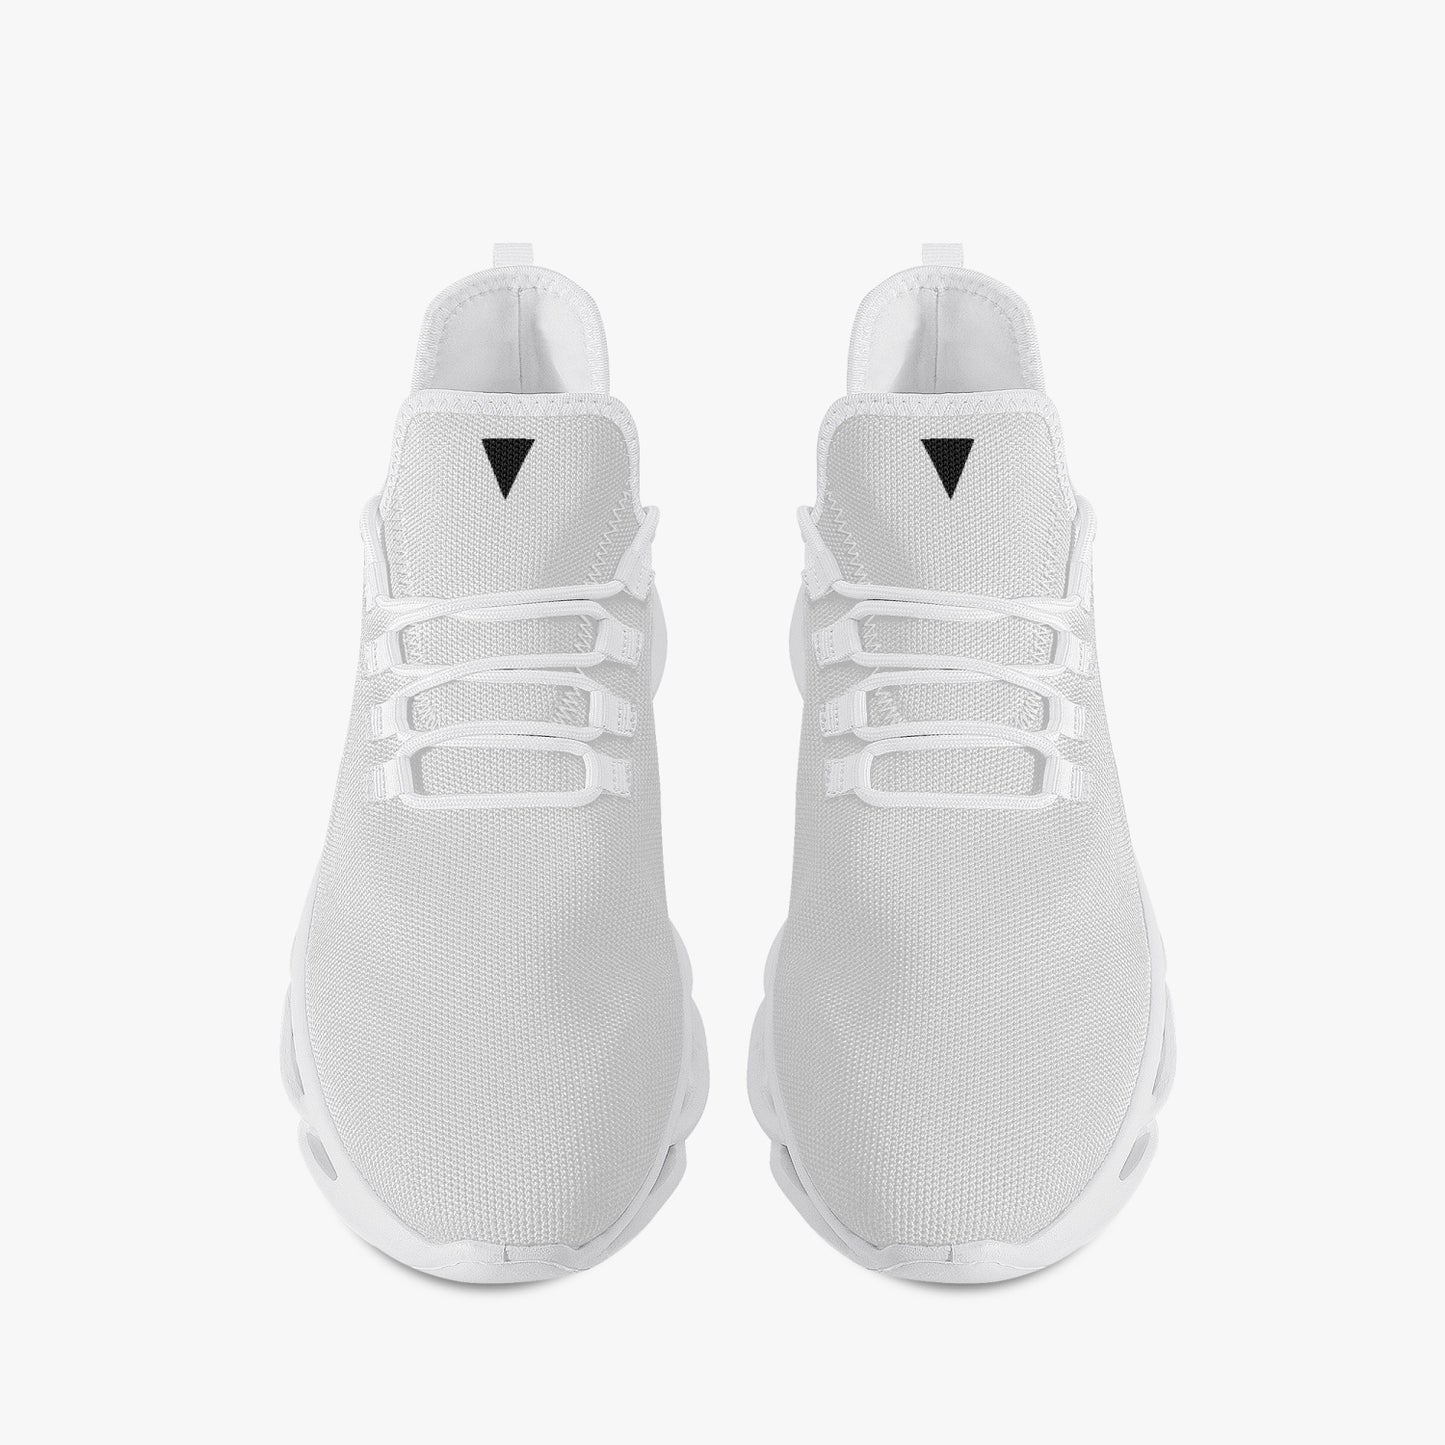 Vluxe Bounce Mesh Knit Sneakers - White/Black